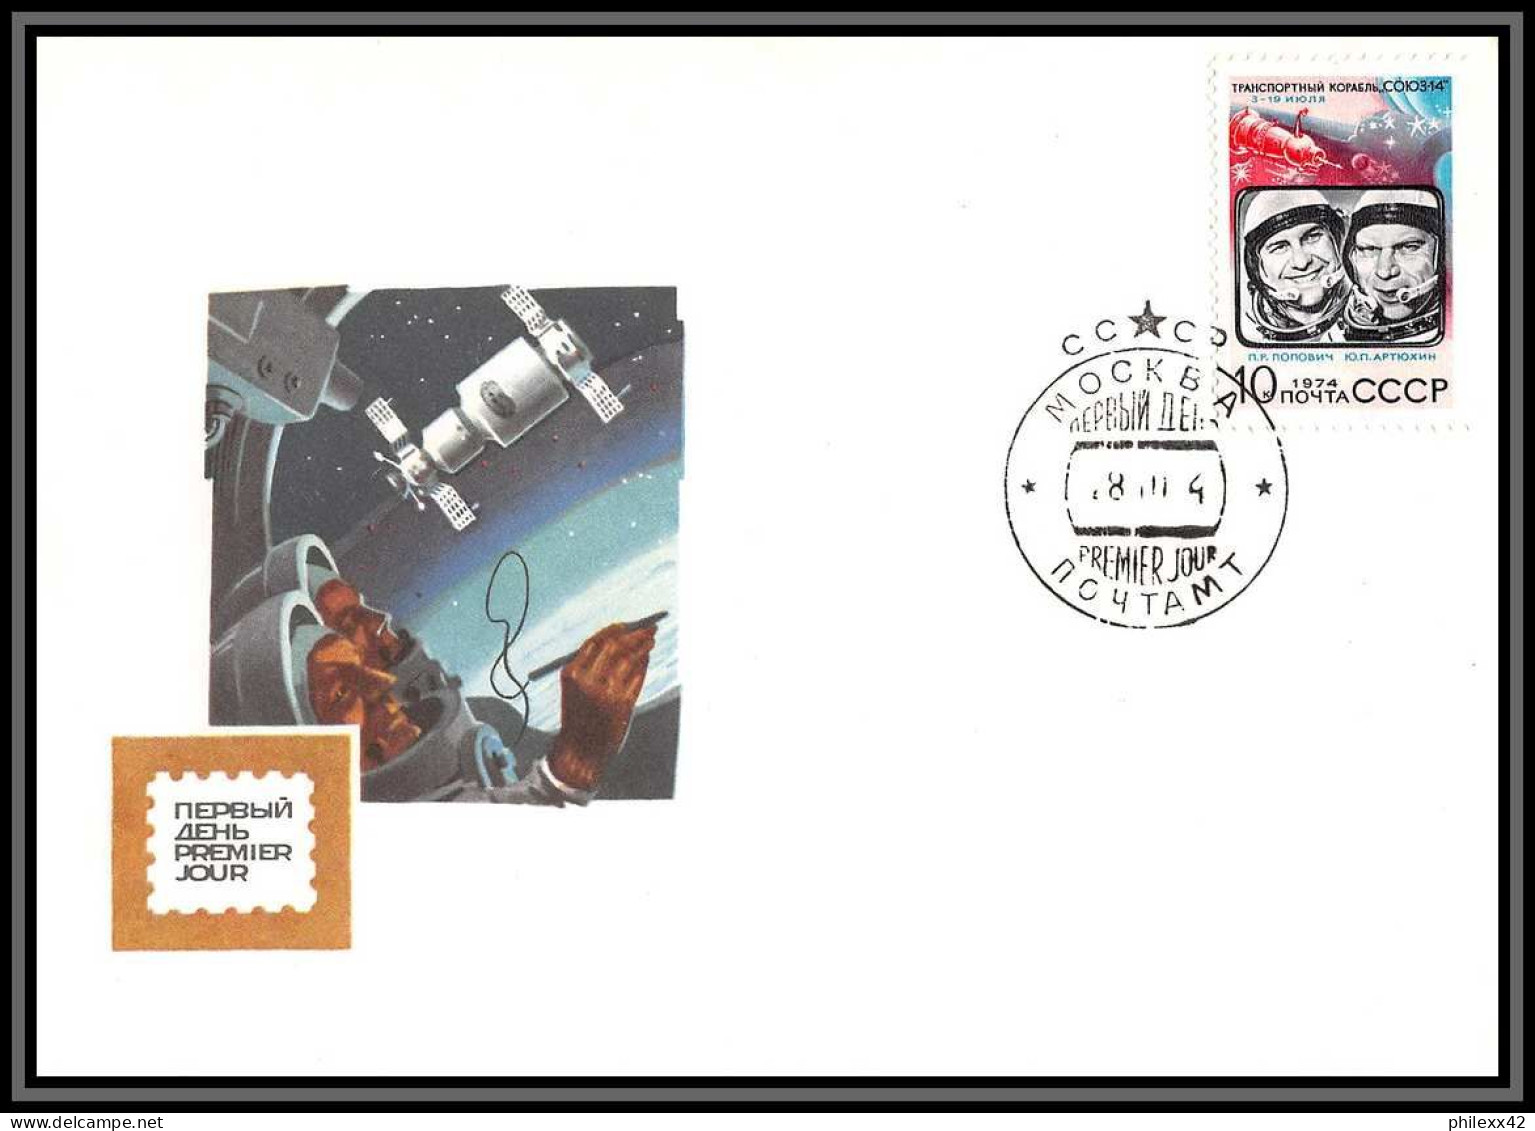 3380 Espace (space Raumfahrt) Lettre (cover) Russie (Russia Urss USSR) Fdc 4091 + Mnh O Soyuz (soyouz Sojus) 14 1974 - UdSSR